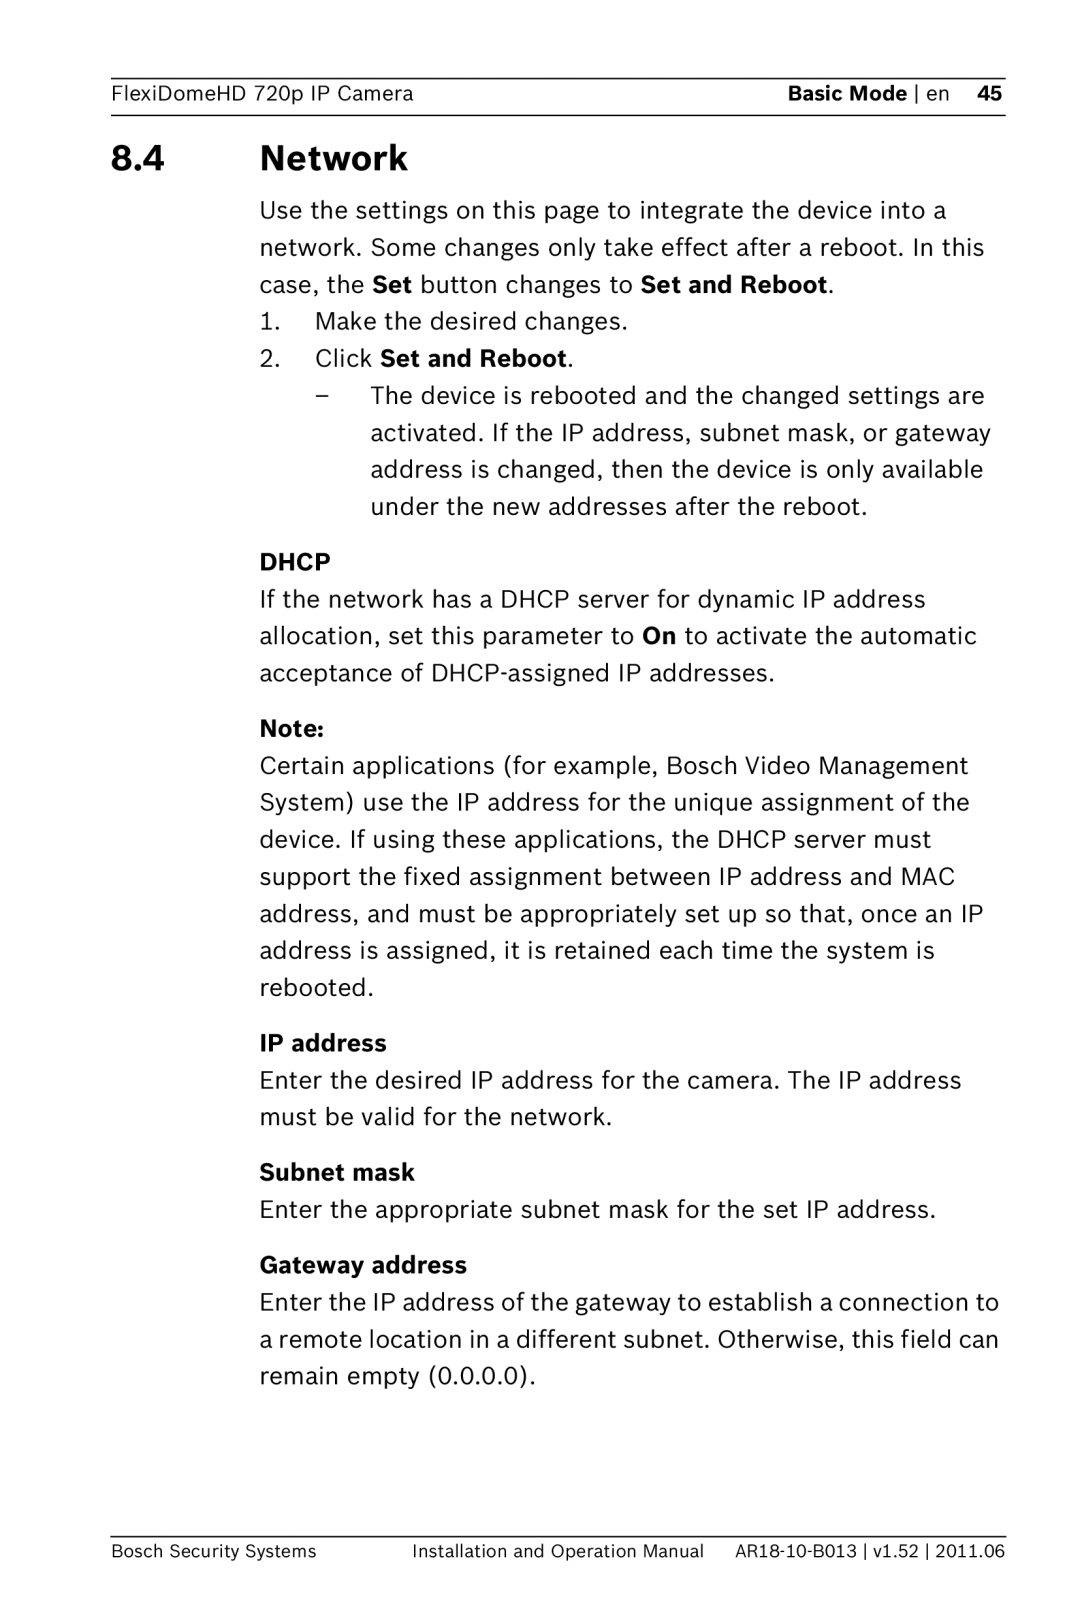 Bosch Appliances NDN-921 operation manual 8.4Network, Click Set and Reboot, Dhcp, IP address, Subnet mask, Gateway address 